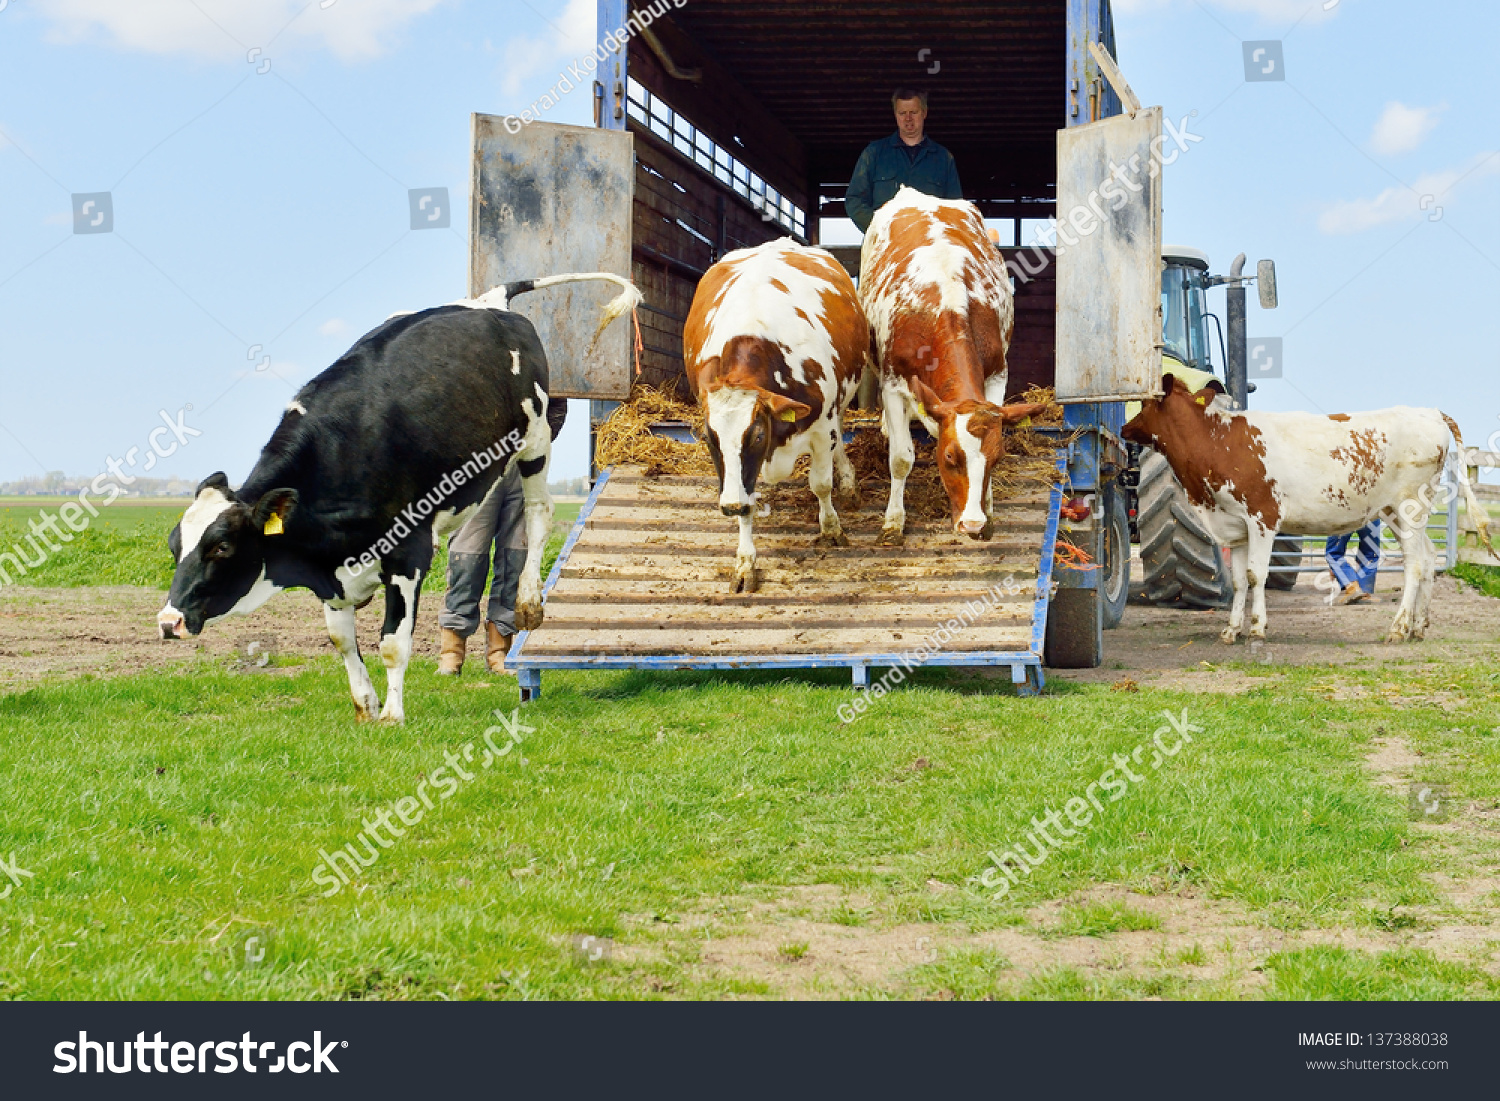 Livestock Transport Of Cows Stock Photo 137388038 : Shutterstock